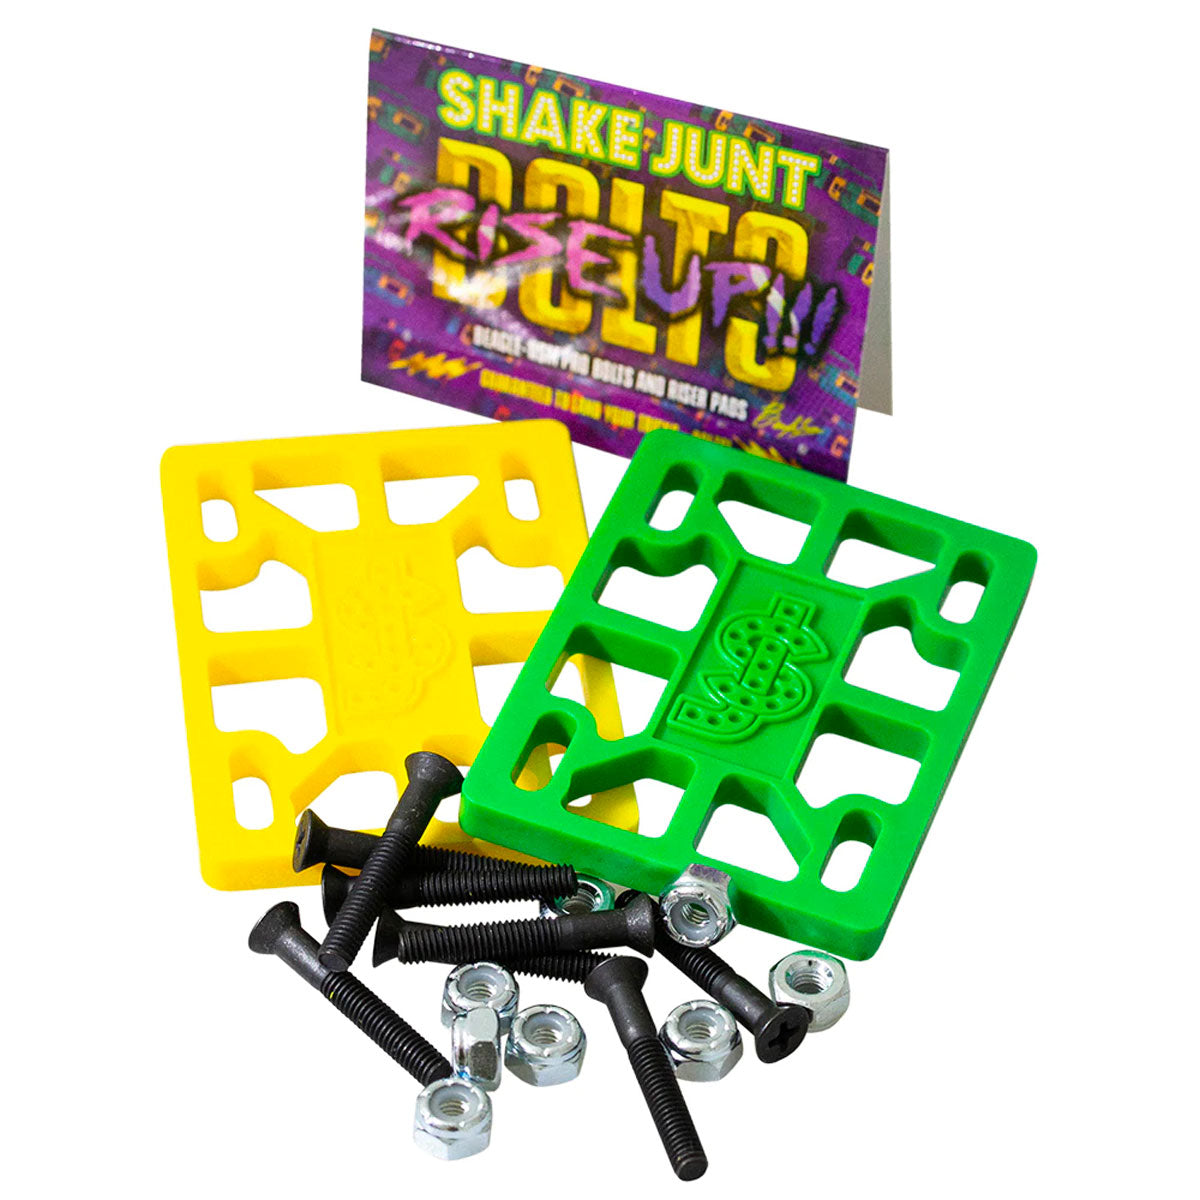 Shake Junt Beagle Rise Up Hardware - Phillips - 1.25